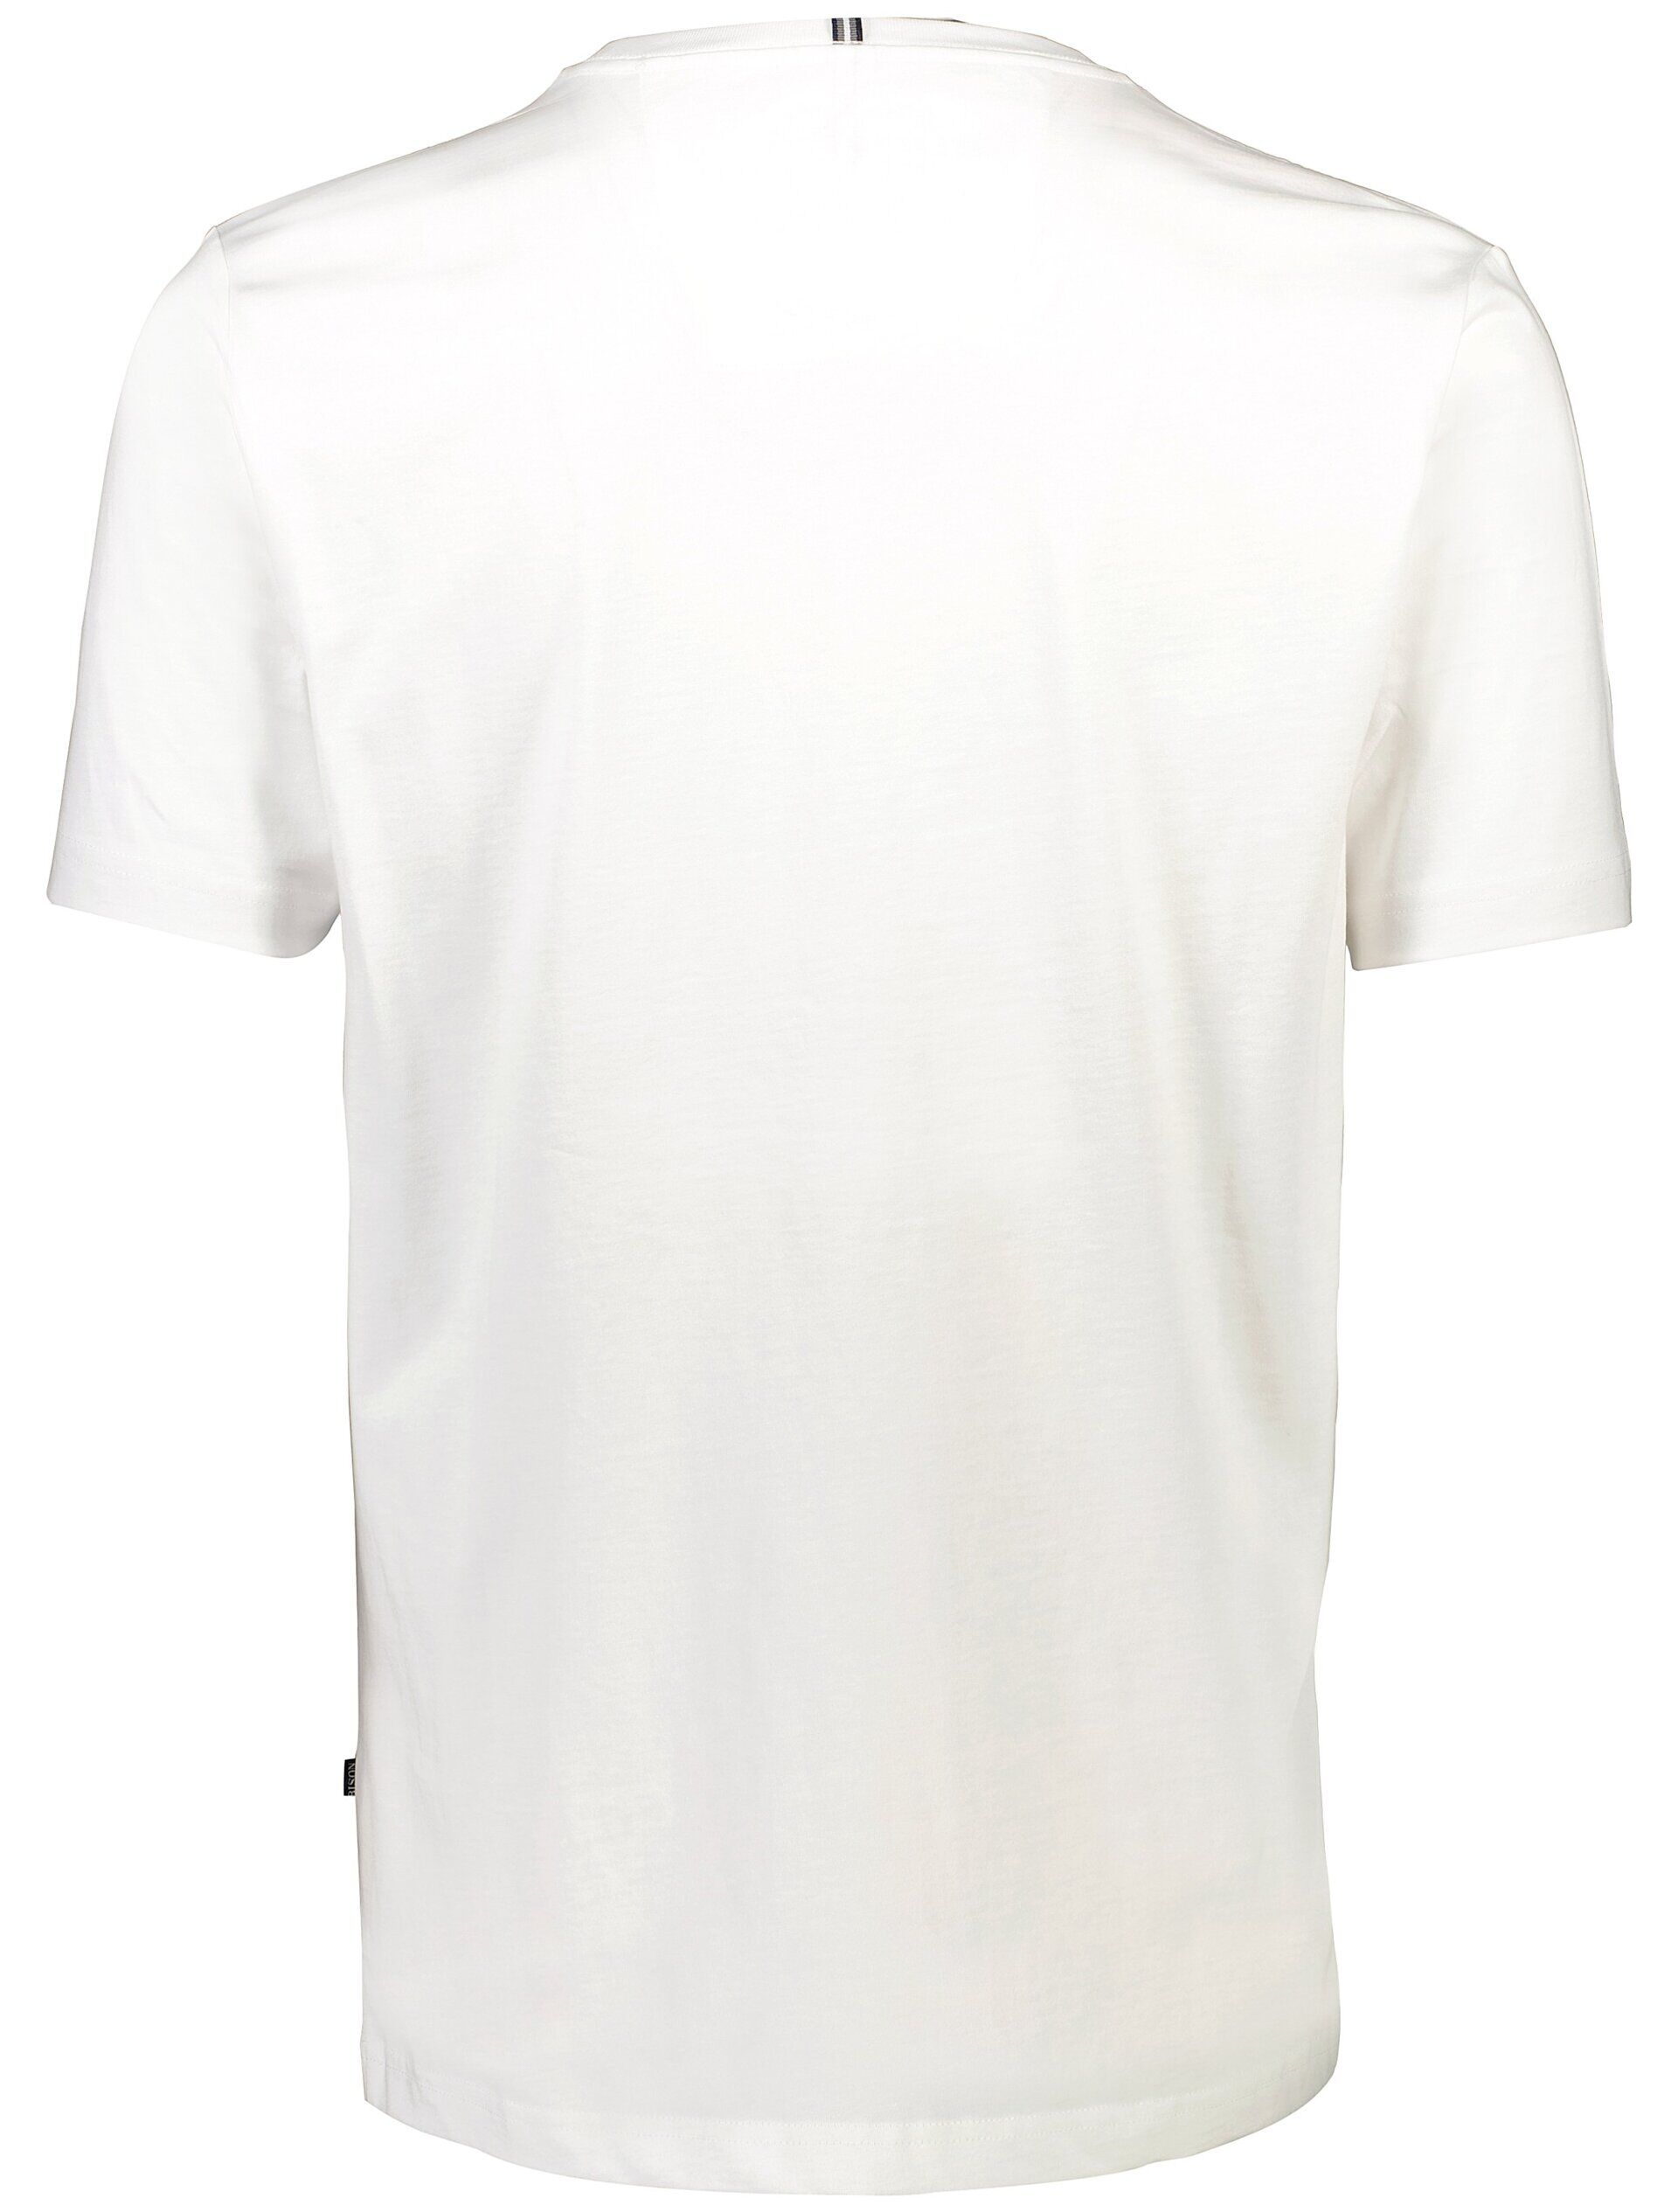 Bison  T-shirt 80-400115PLUS